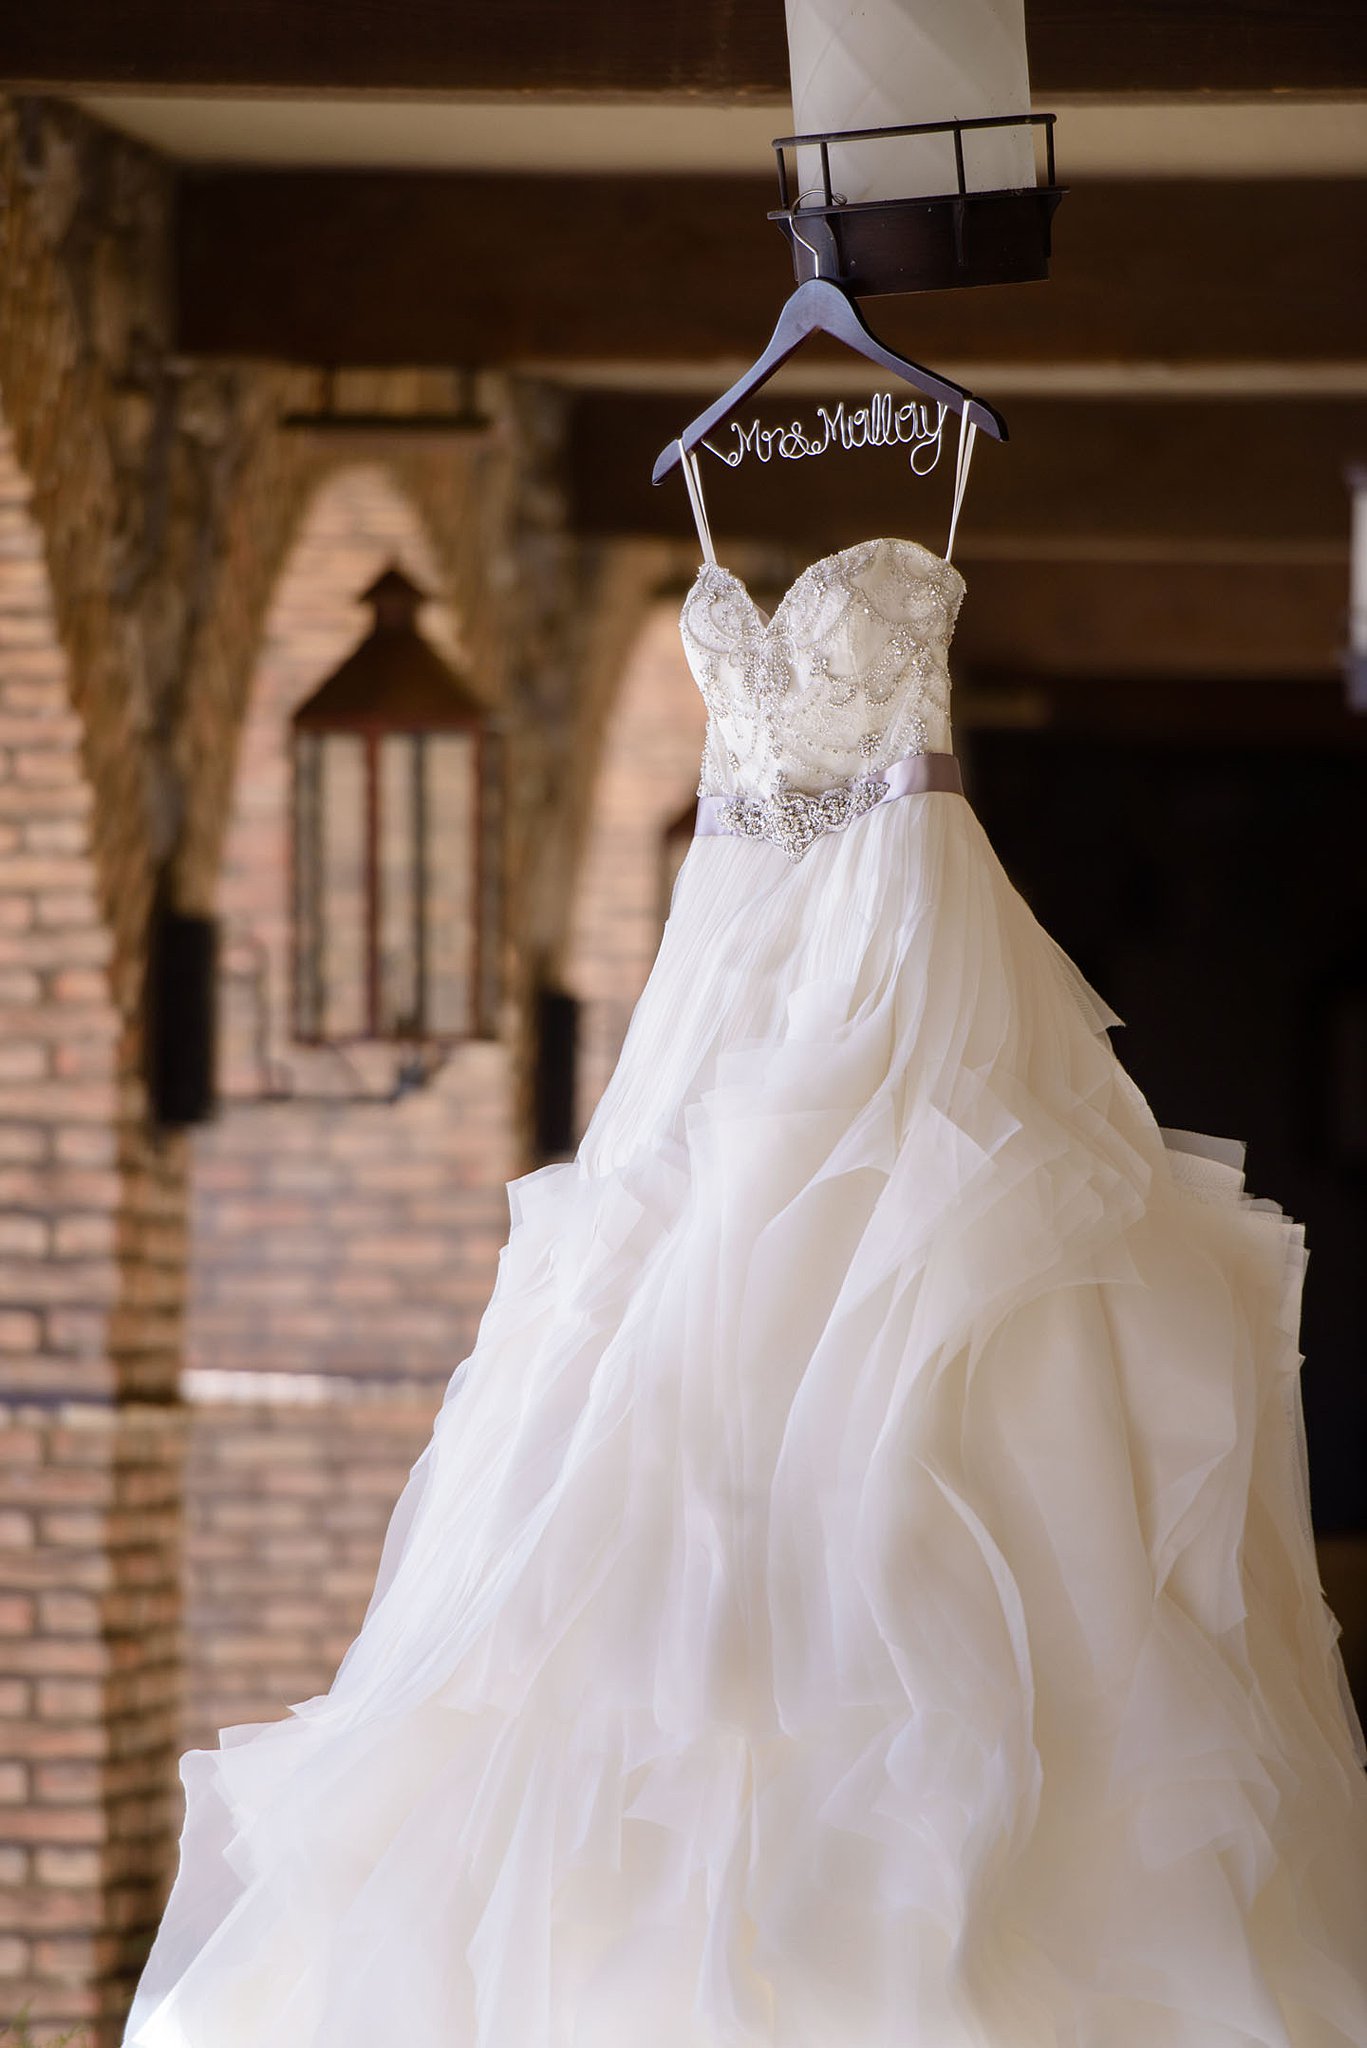 White wedding dress with silver belt hangs on a lantern in a n outdoor brick hallway